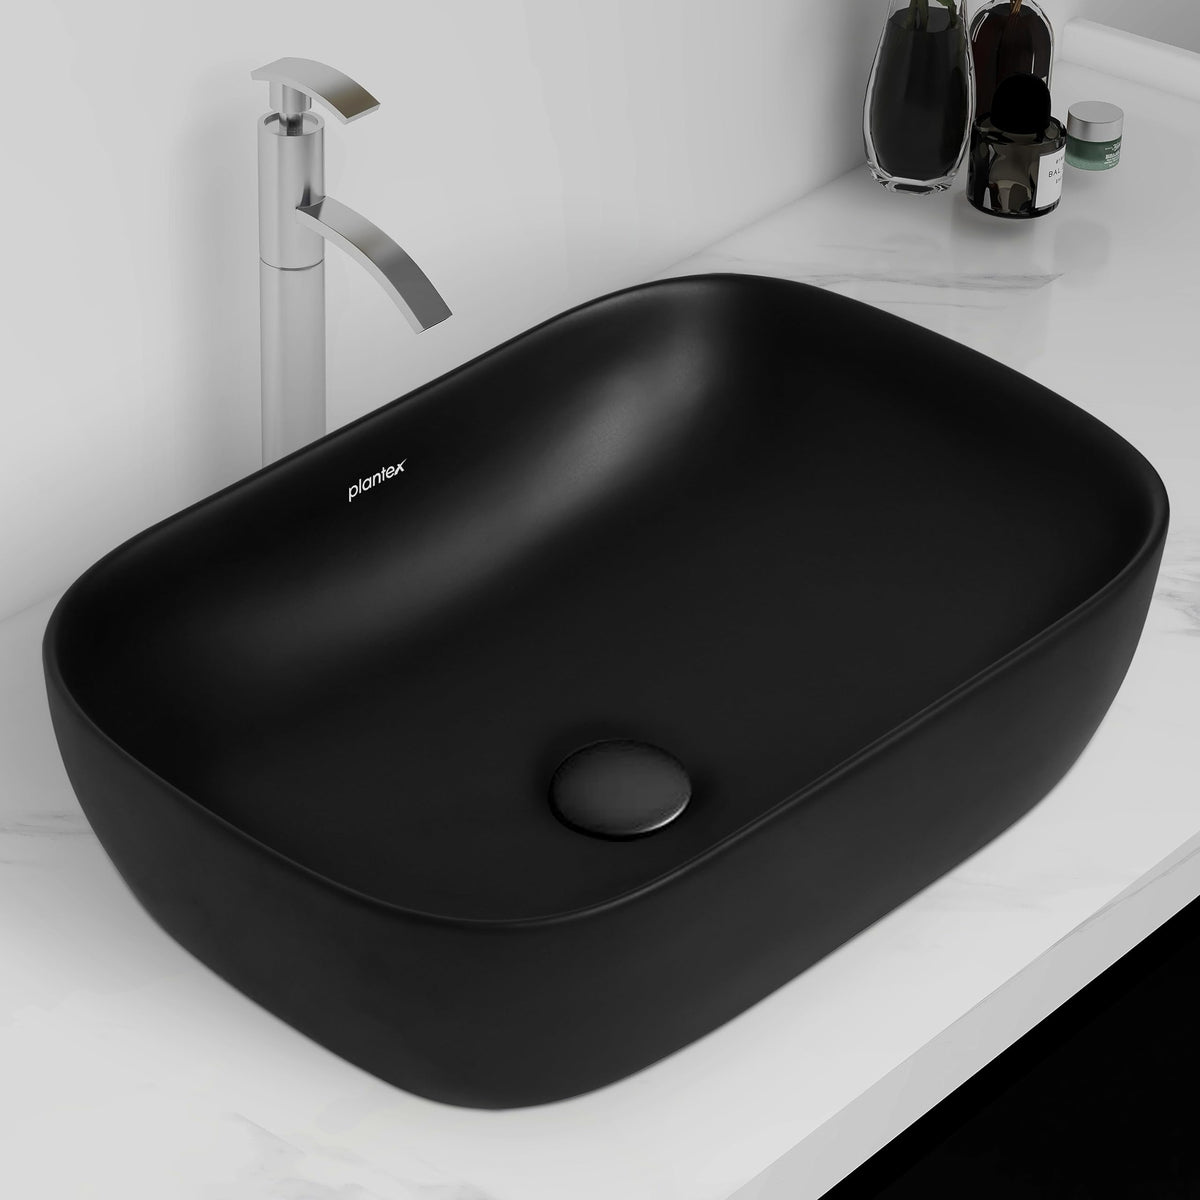 Plantex Ceramic Basin for Bathroom/Table Top Ceramic Basin/Washbasin for Bathroom - (ALPHA-NS-BLACK-Marble Finish)